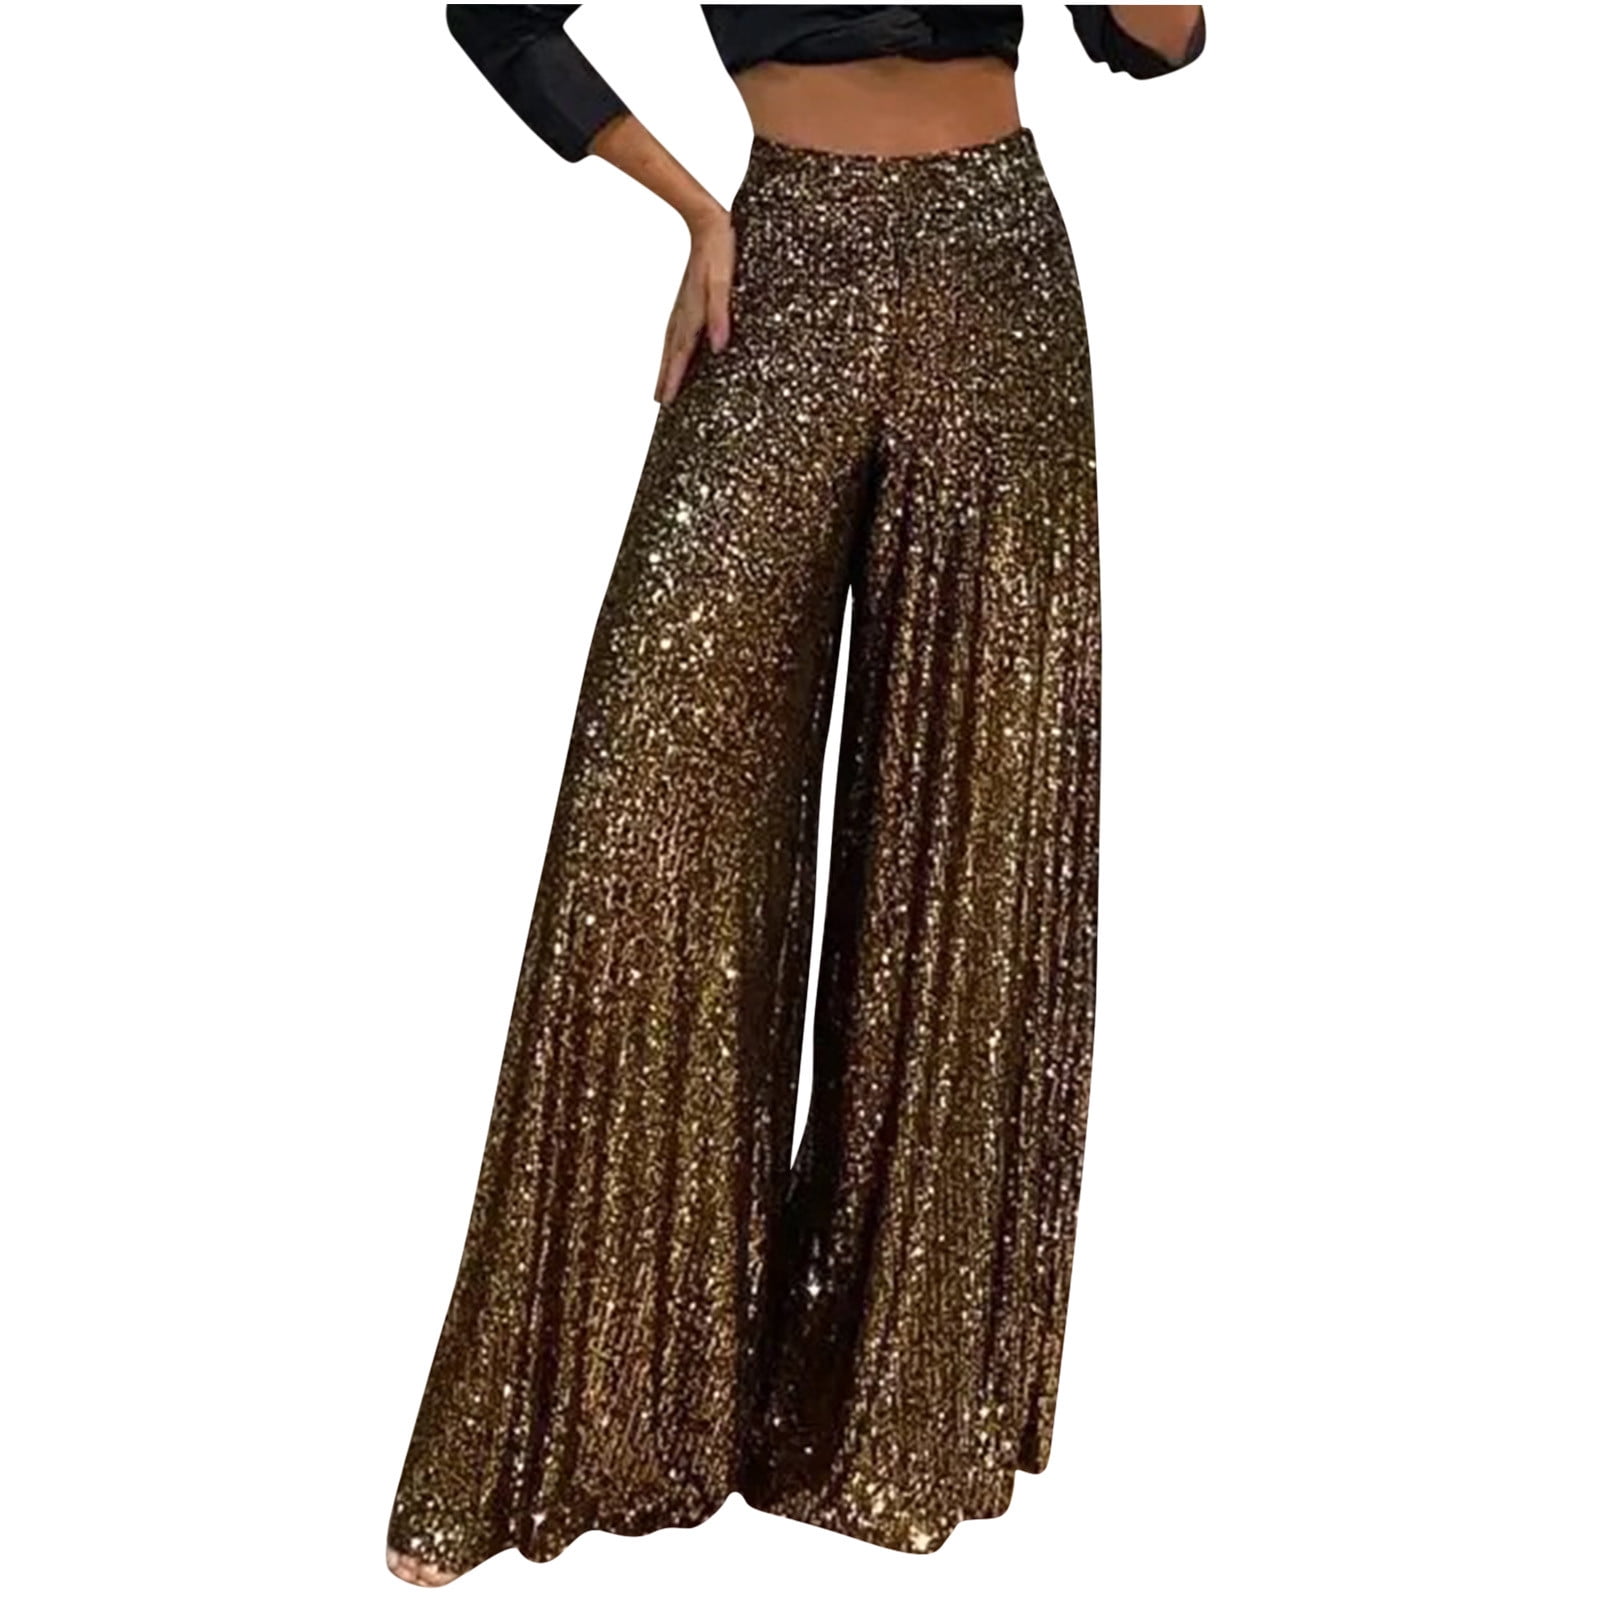 Women's Sequin Pants, Glitter & Sparkly Pants